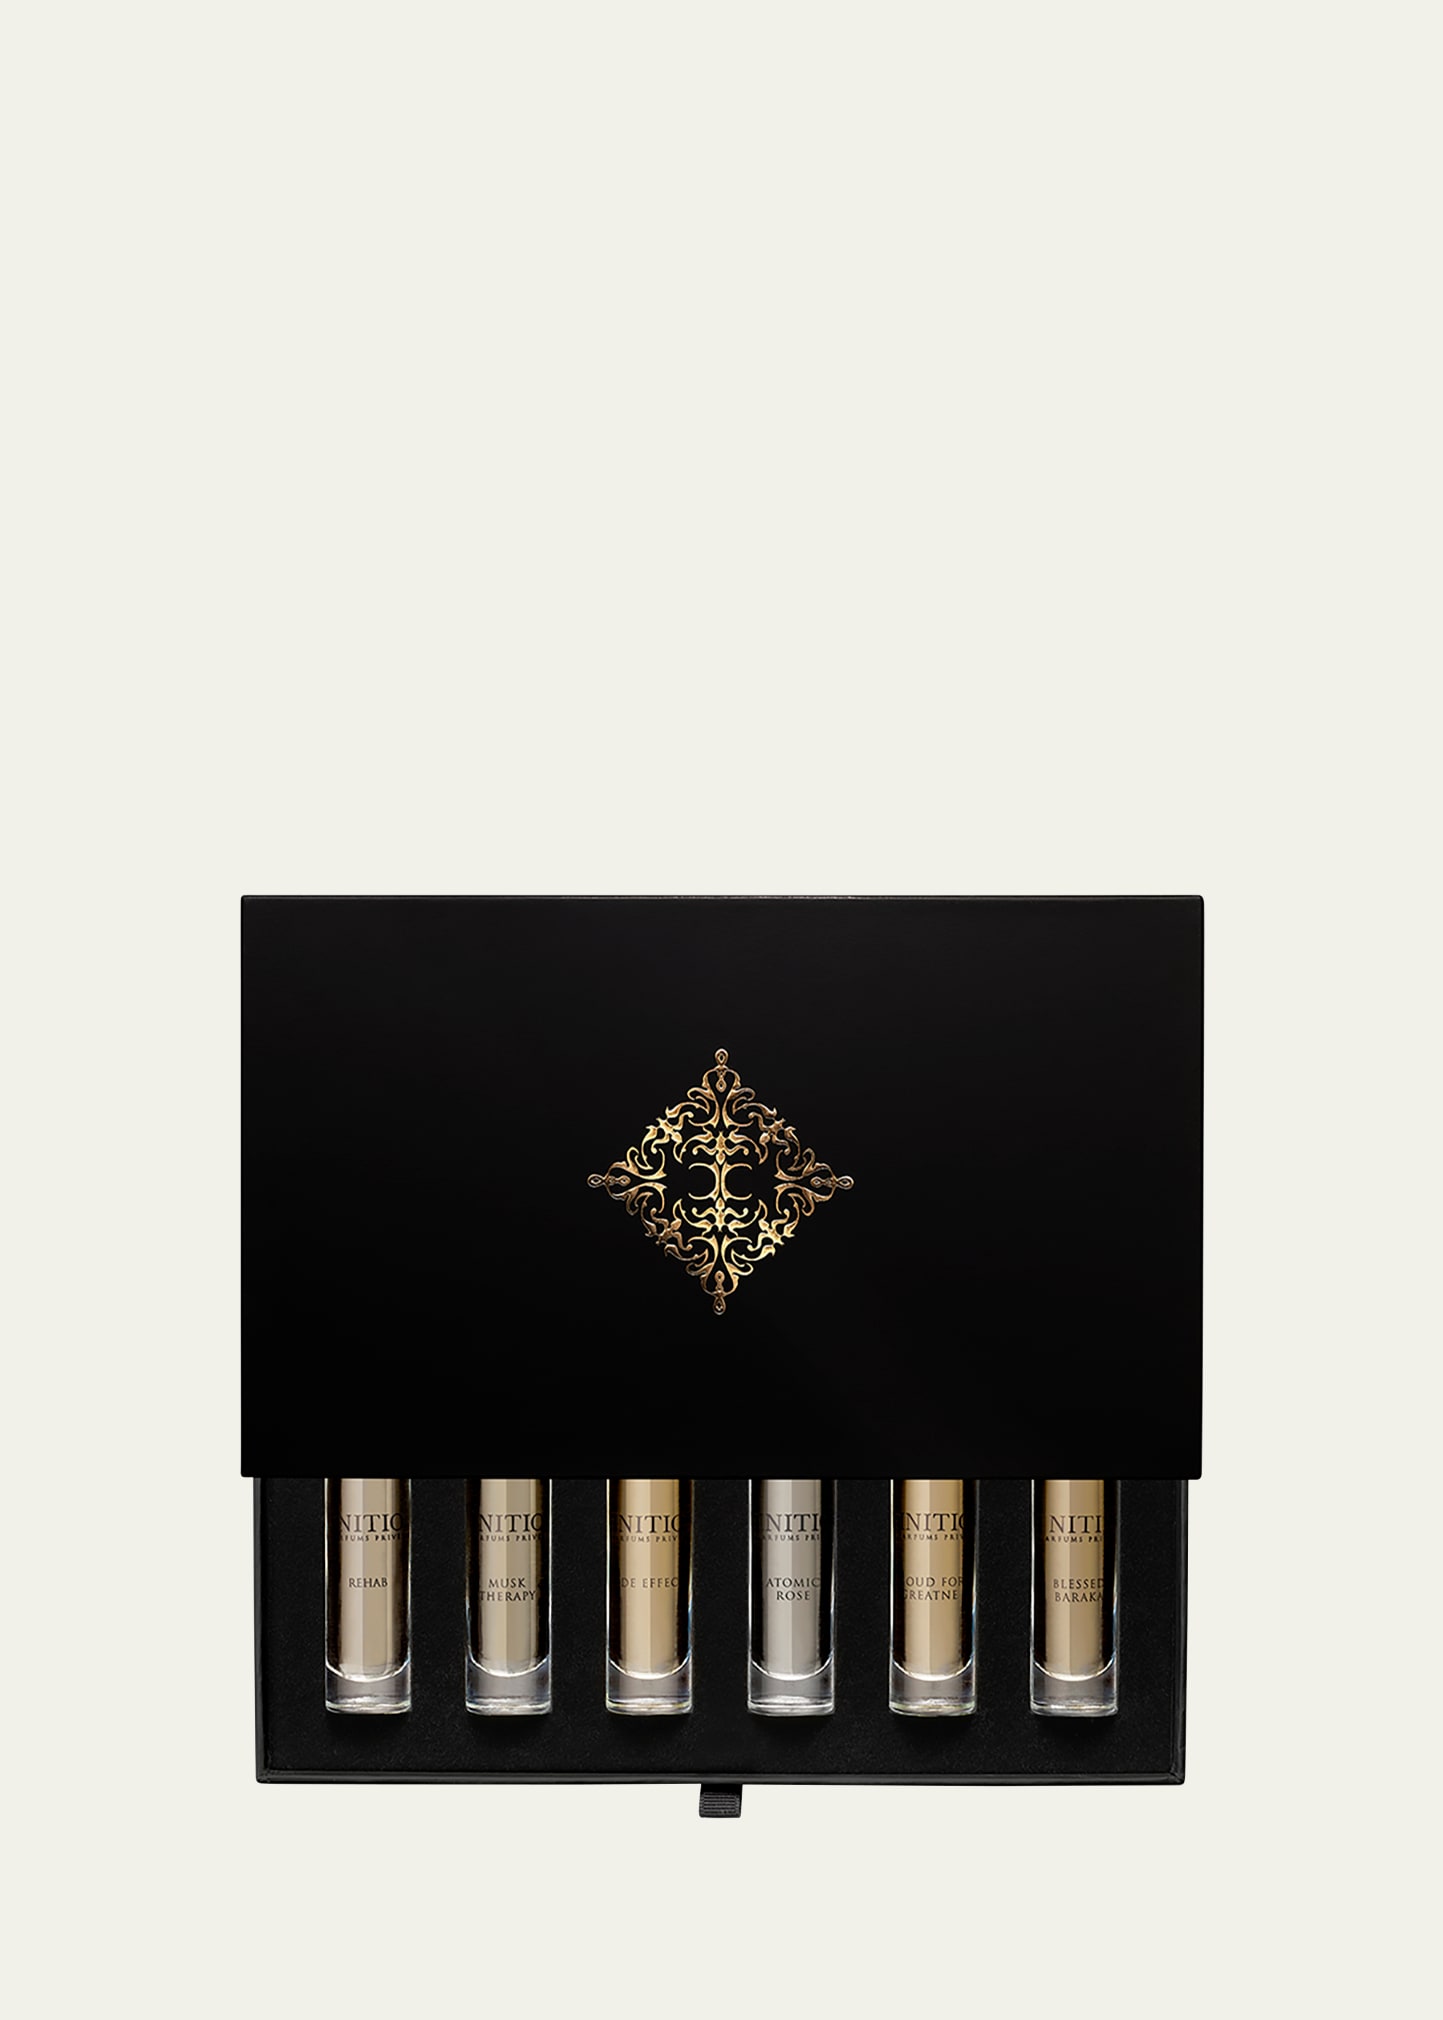 Initio Parfums Prives Initiation Coffret, 6 x 10 mL